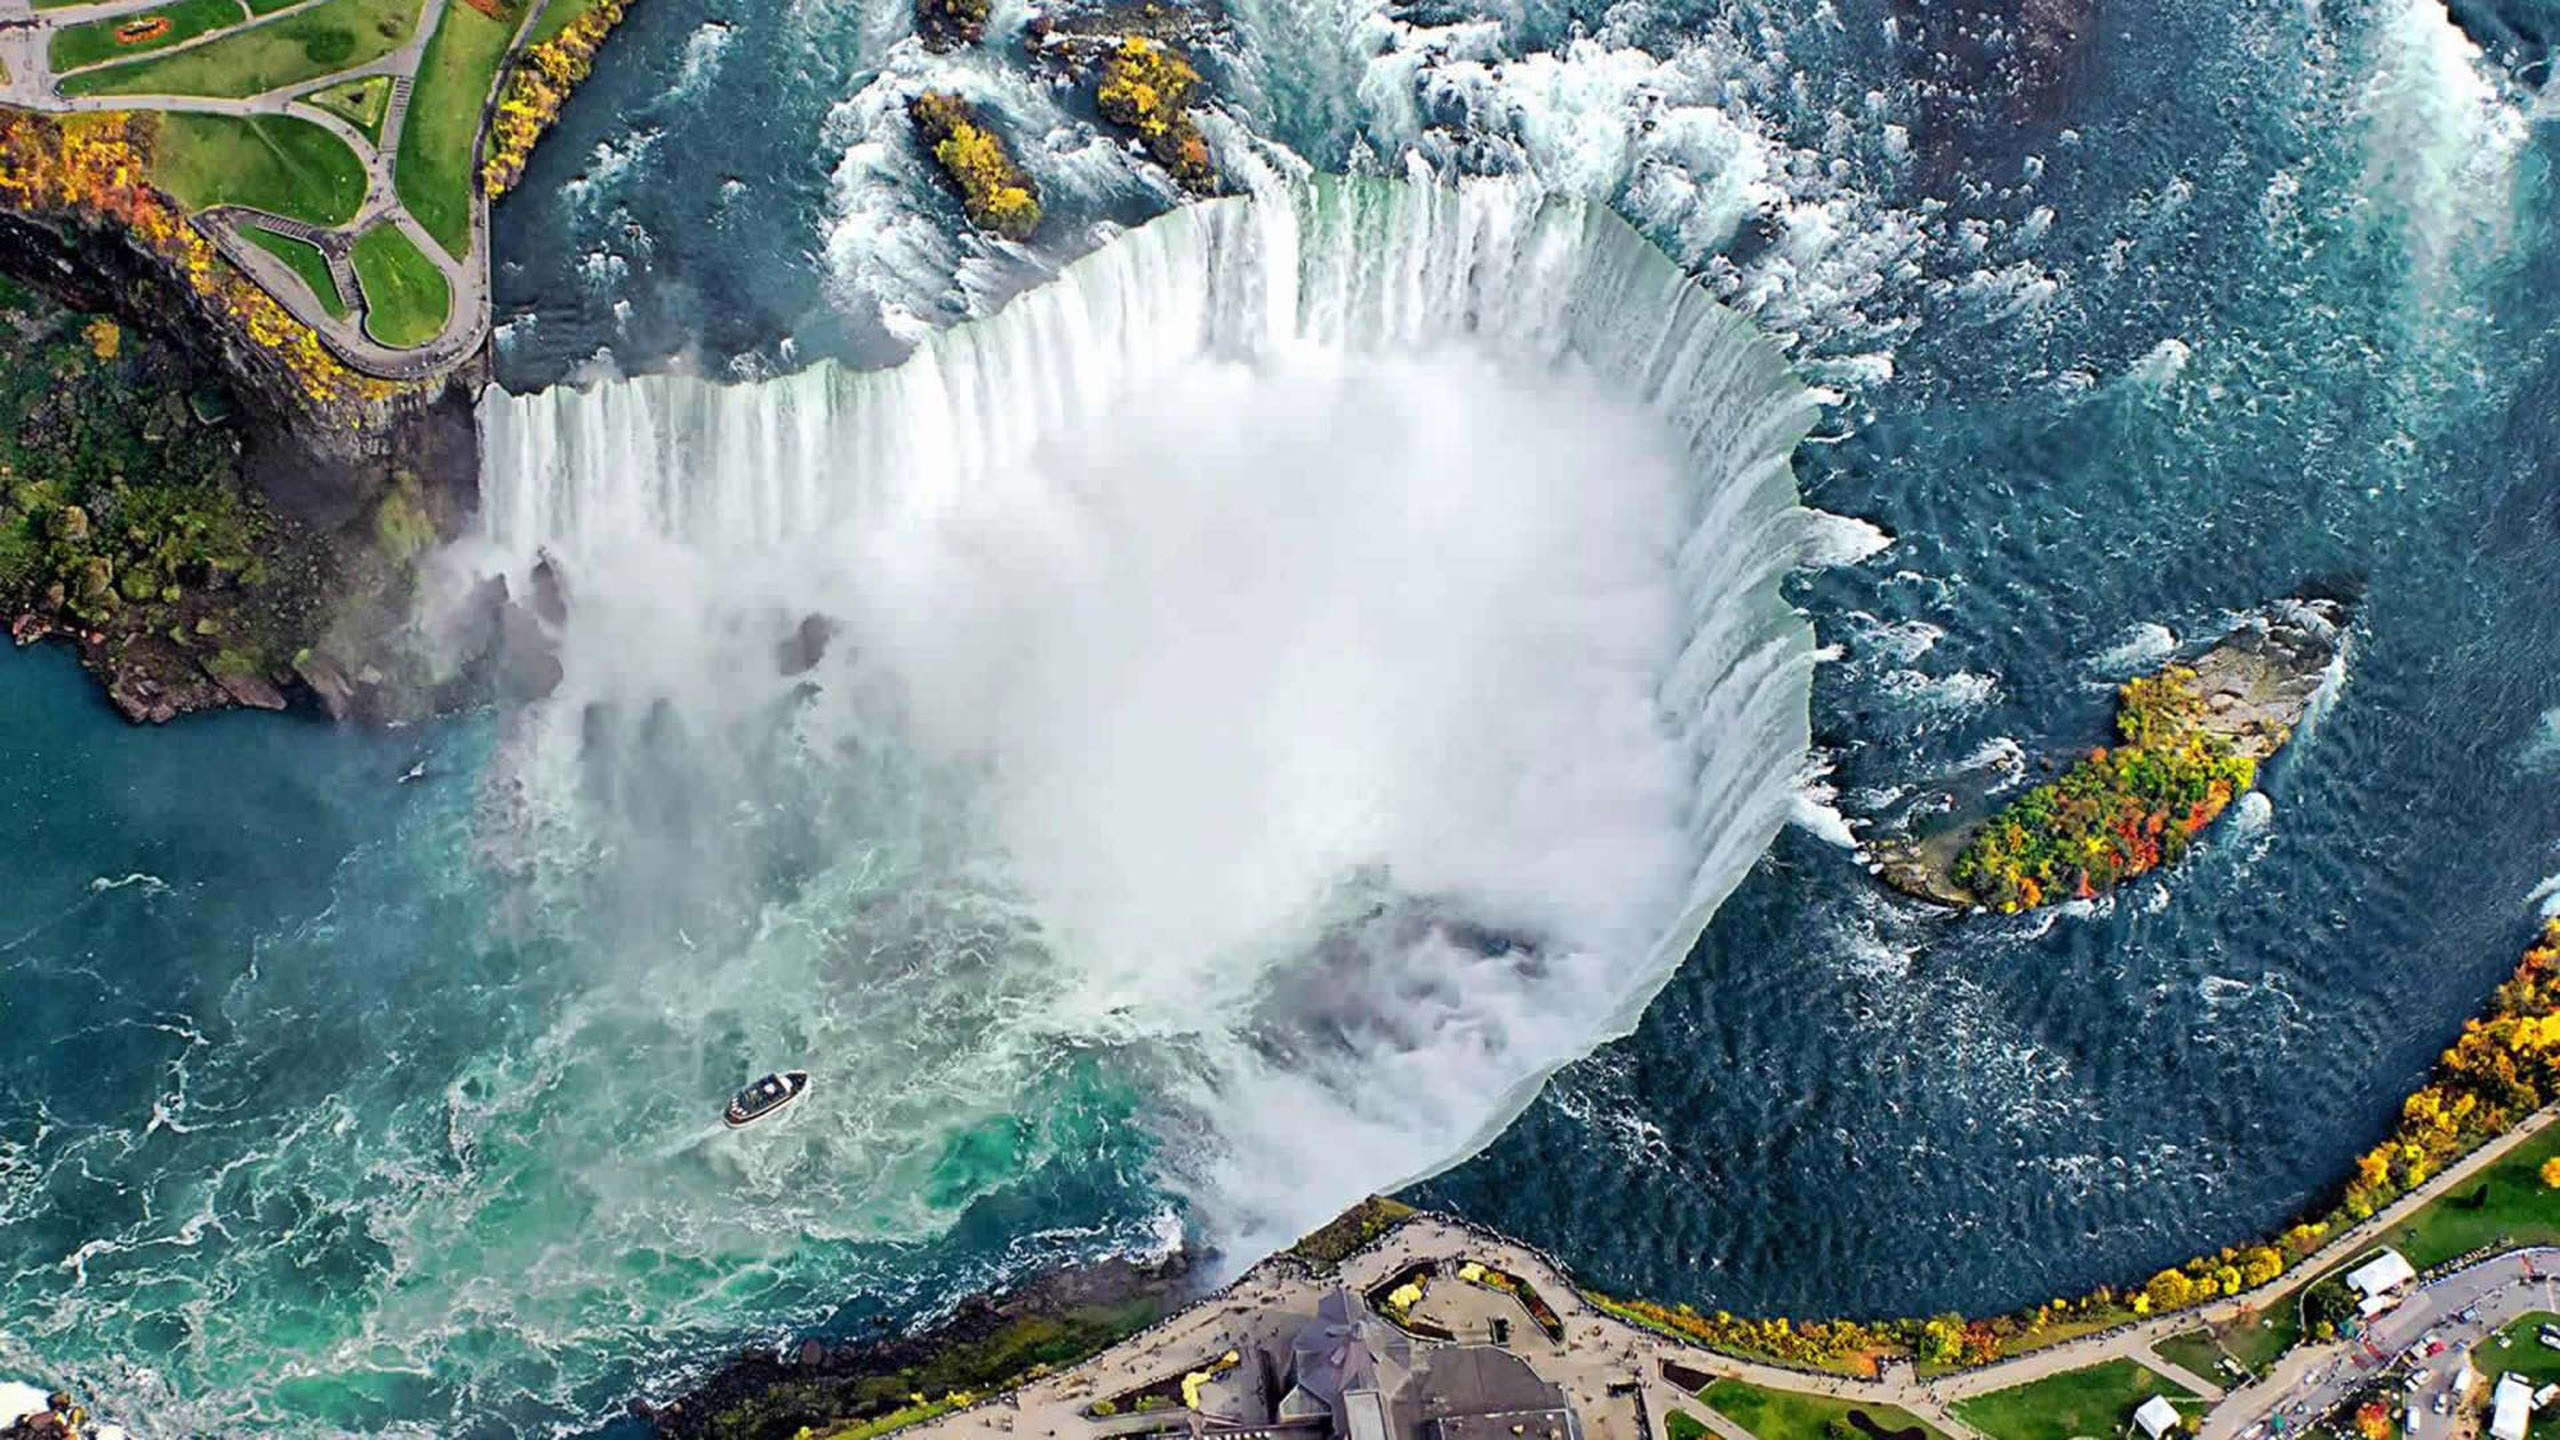 Ниагарский водопад в америке. Ниагарский водопад Канада. Северная Америка Ниагарский водопад. США Ниагара водопад. Ниагарский водопад, Канада, США.